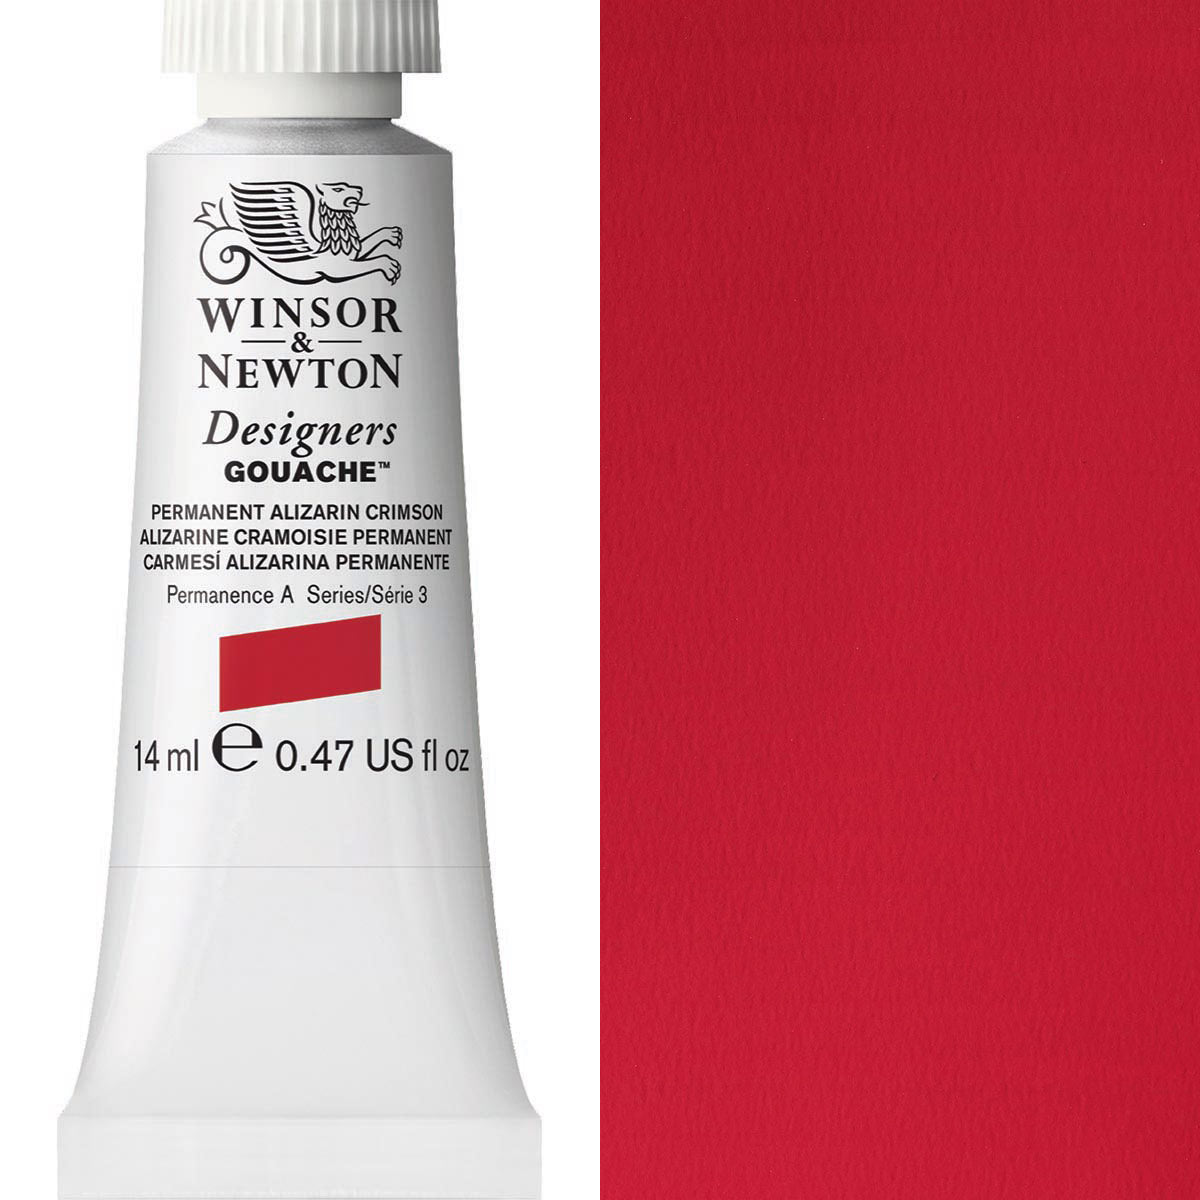 Winsor und Newton - Designer Gouache - 14ml - Permanent Alizarin Crimson